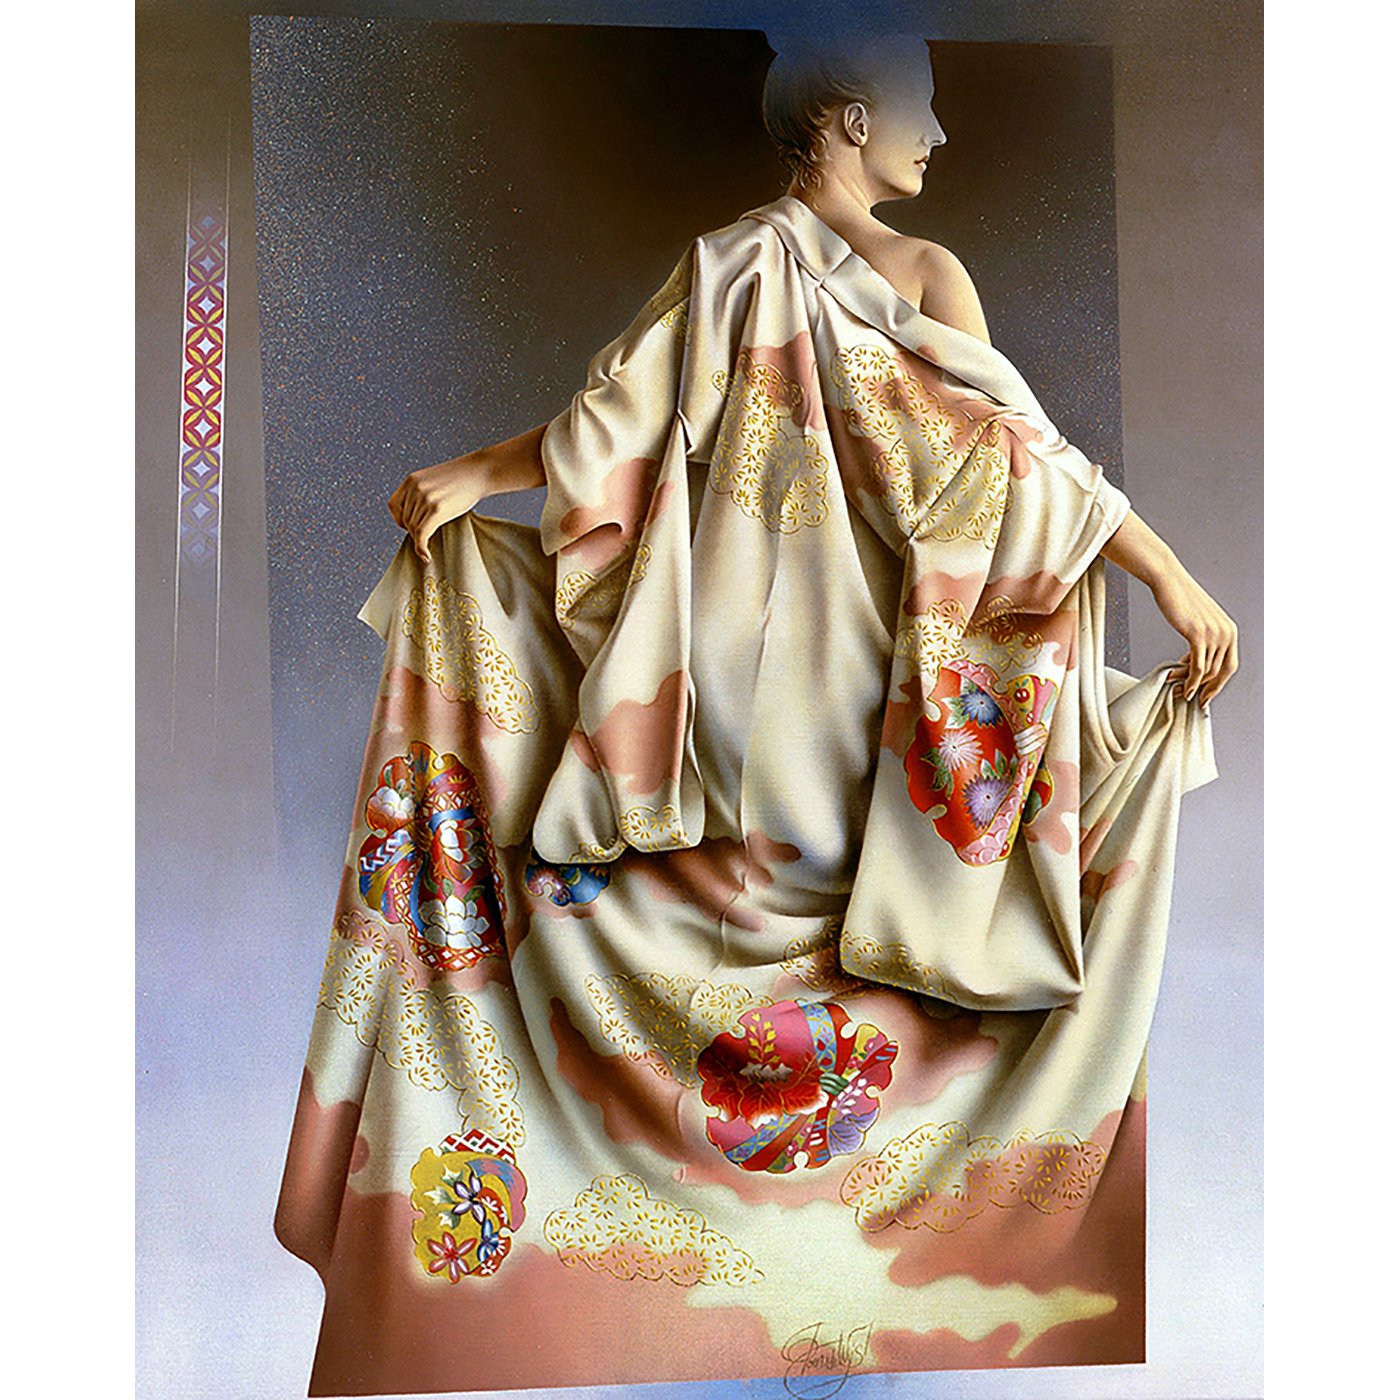 The kimono of Camille. Watercolour, Art print